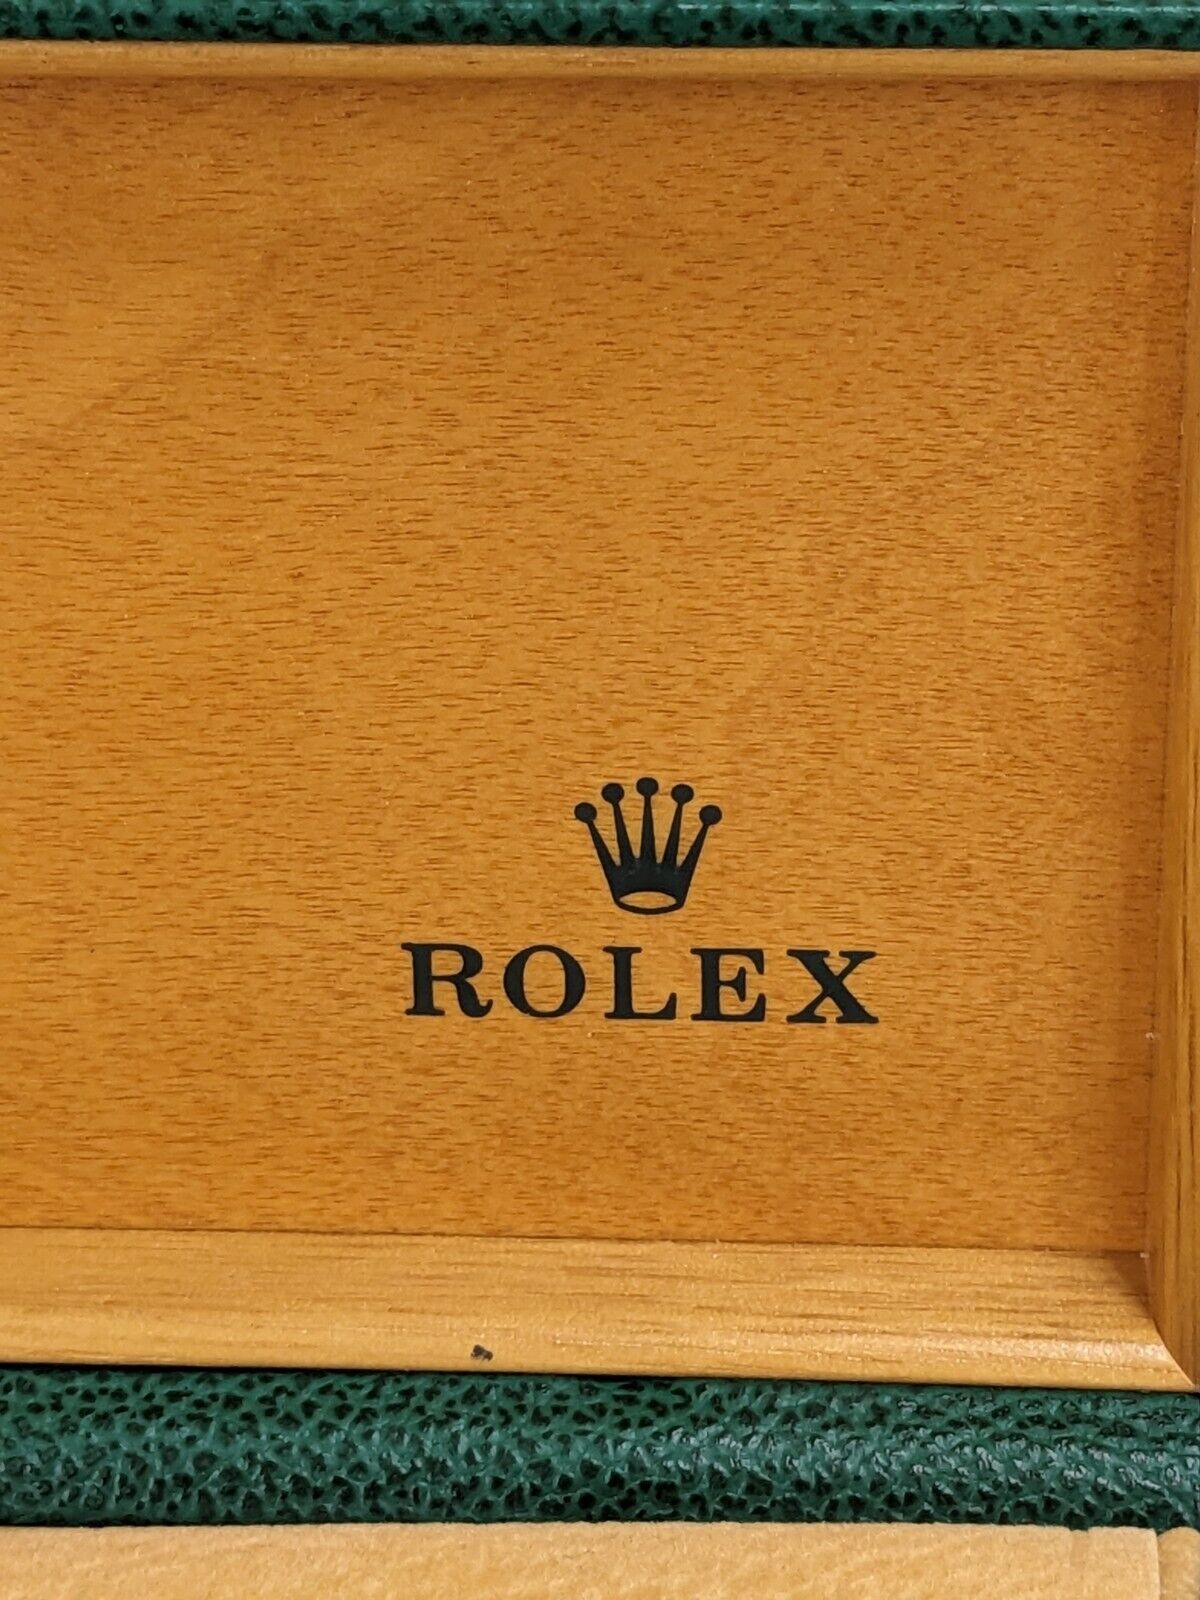 VINTAGE GENUINE ROLEX 14000 Air-king watch box case paper 68.00.55 231001002yS